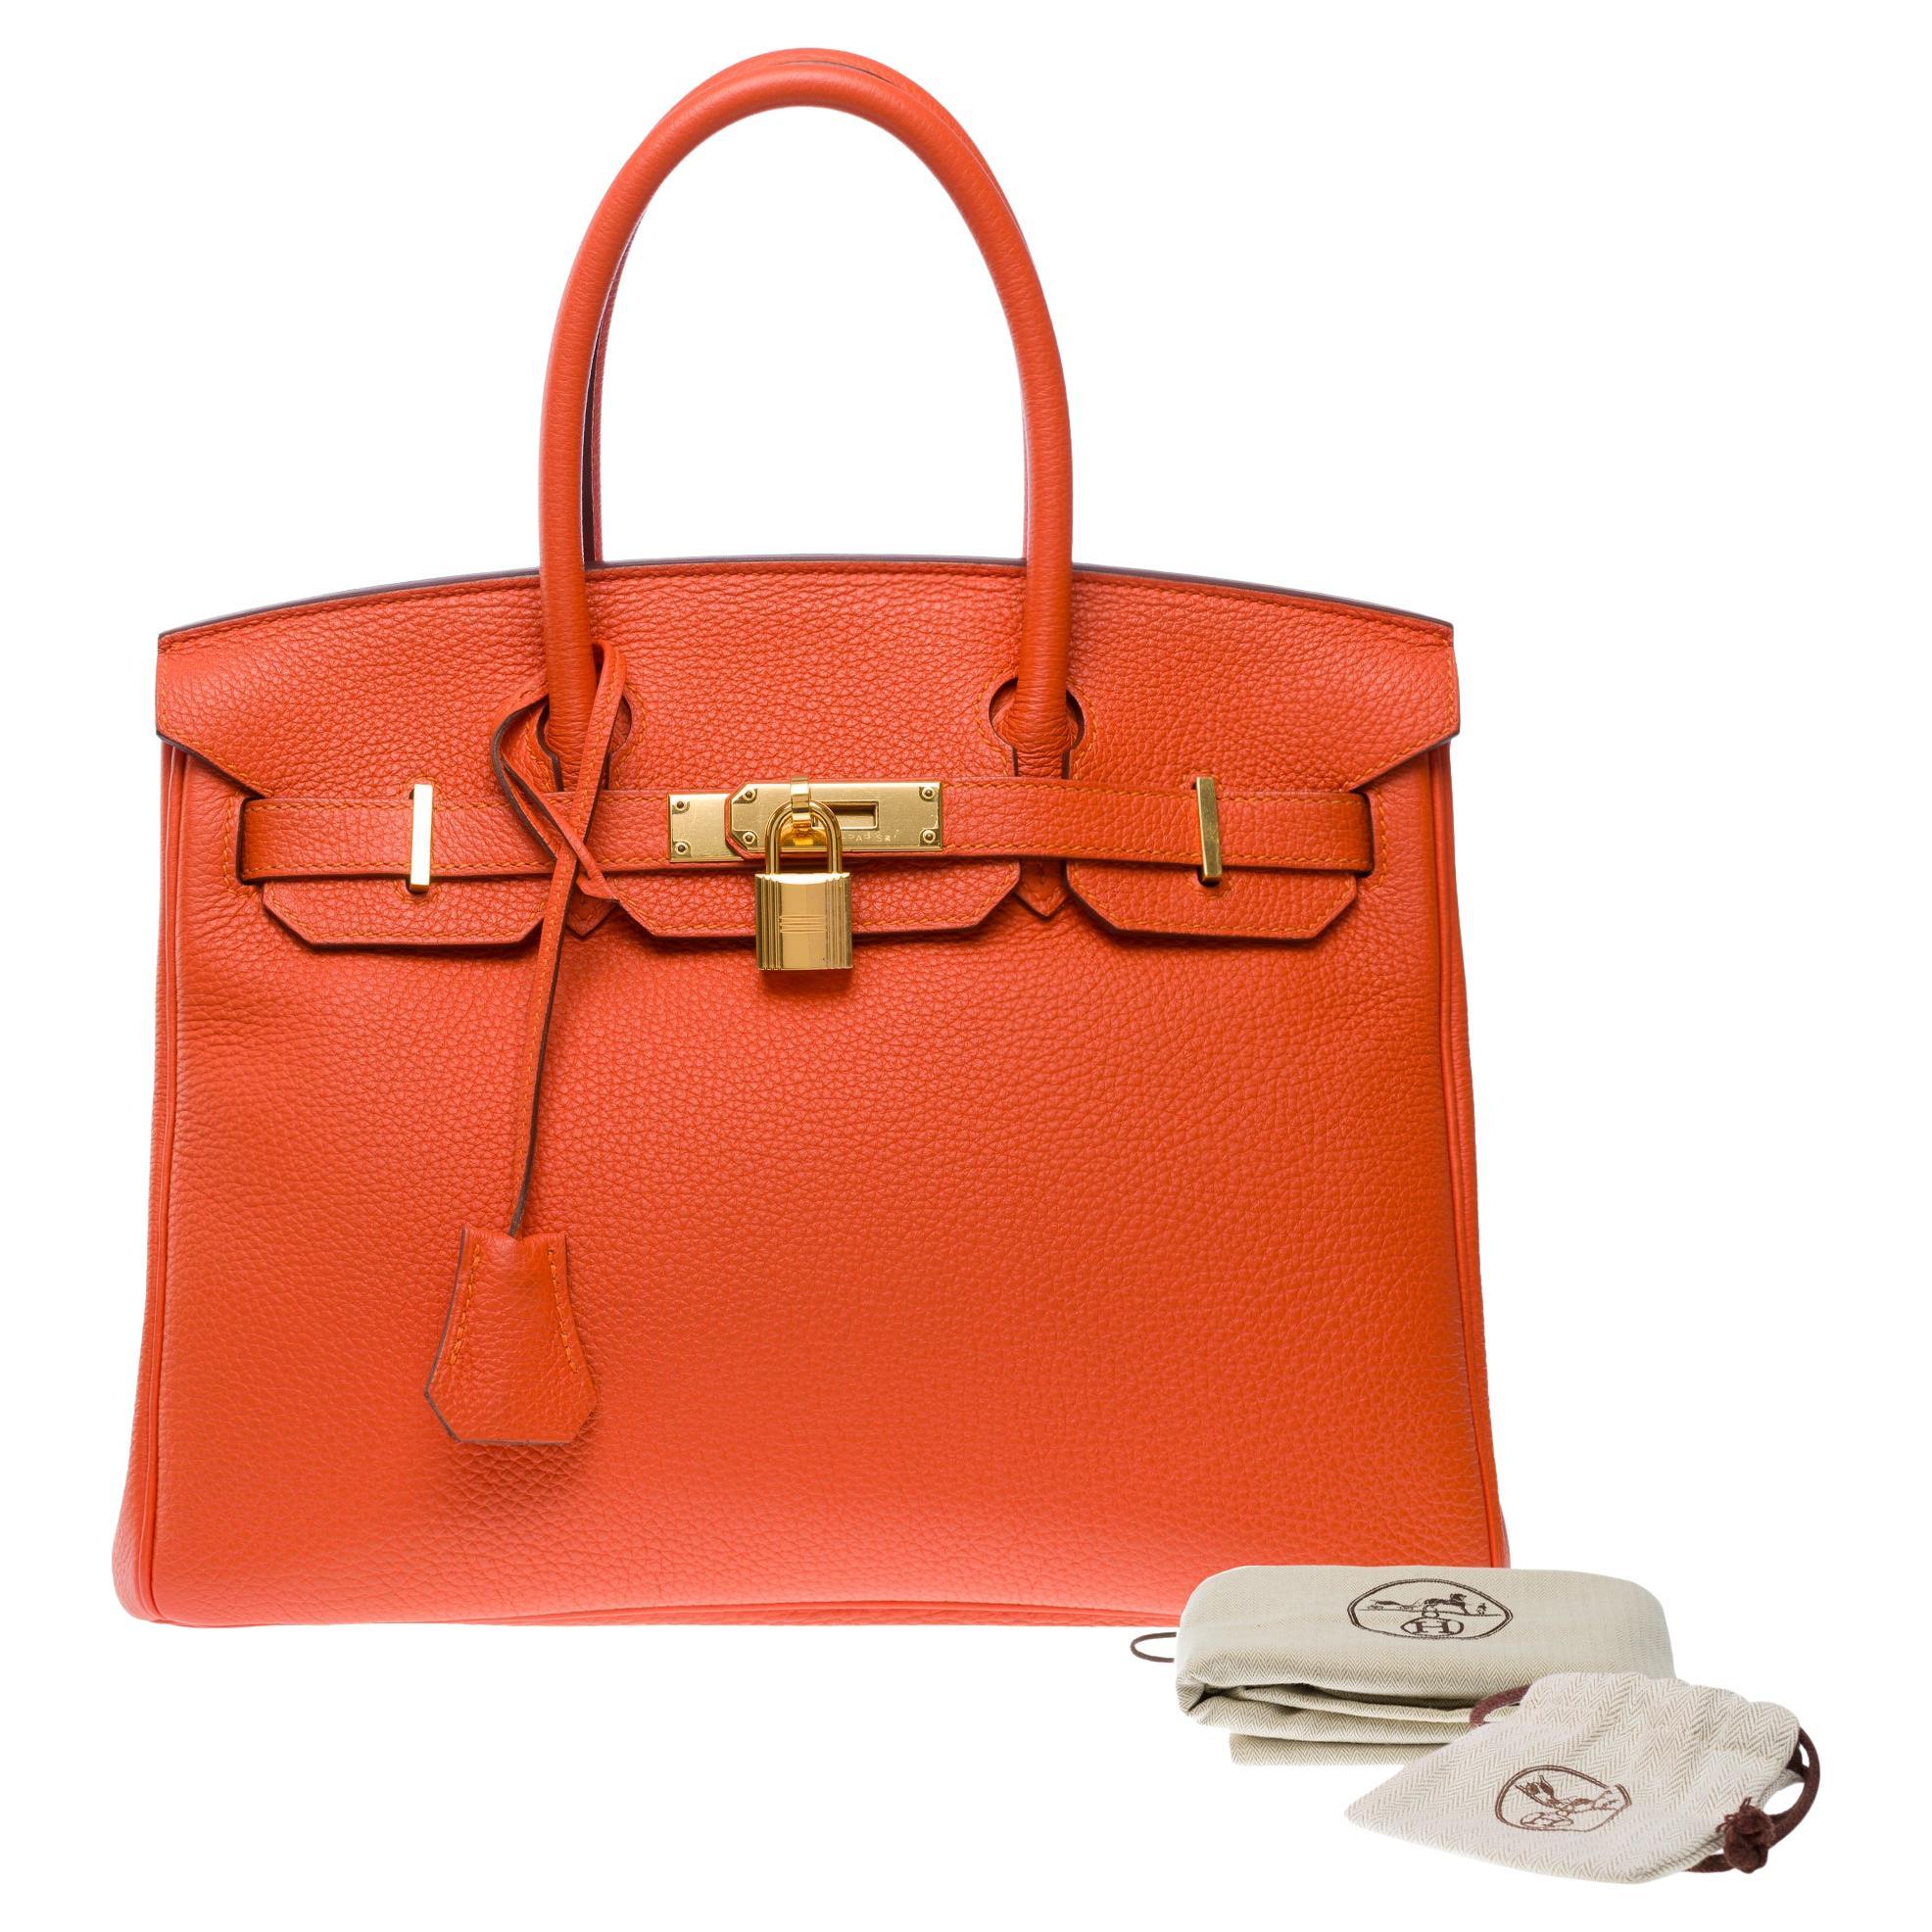 Superb Hermes Birkin 30 handbag in Taurillon Clemence Orange Poppy leather, GHW For Sale